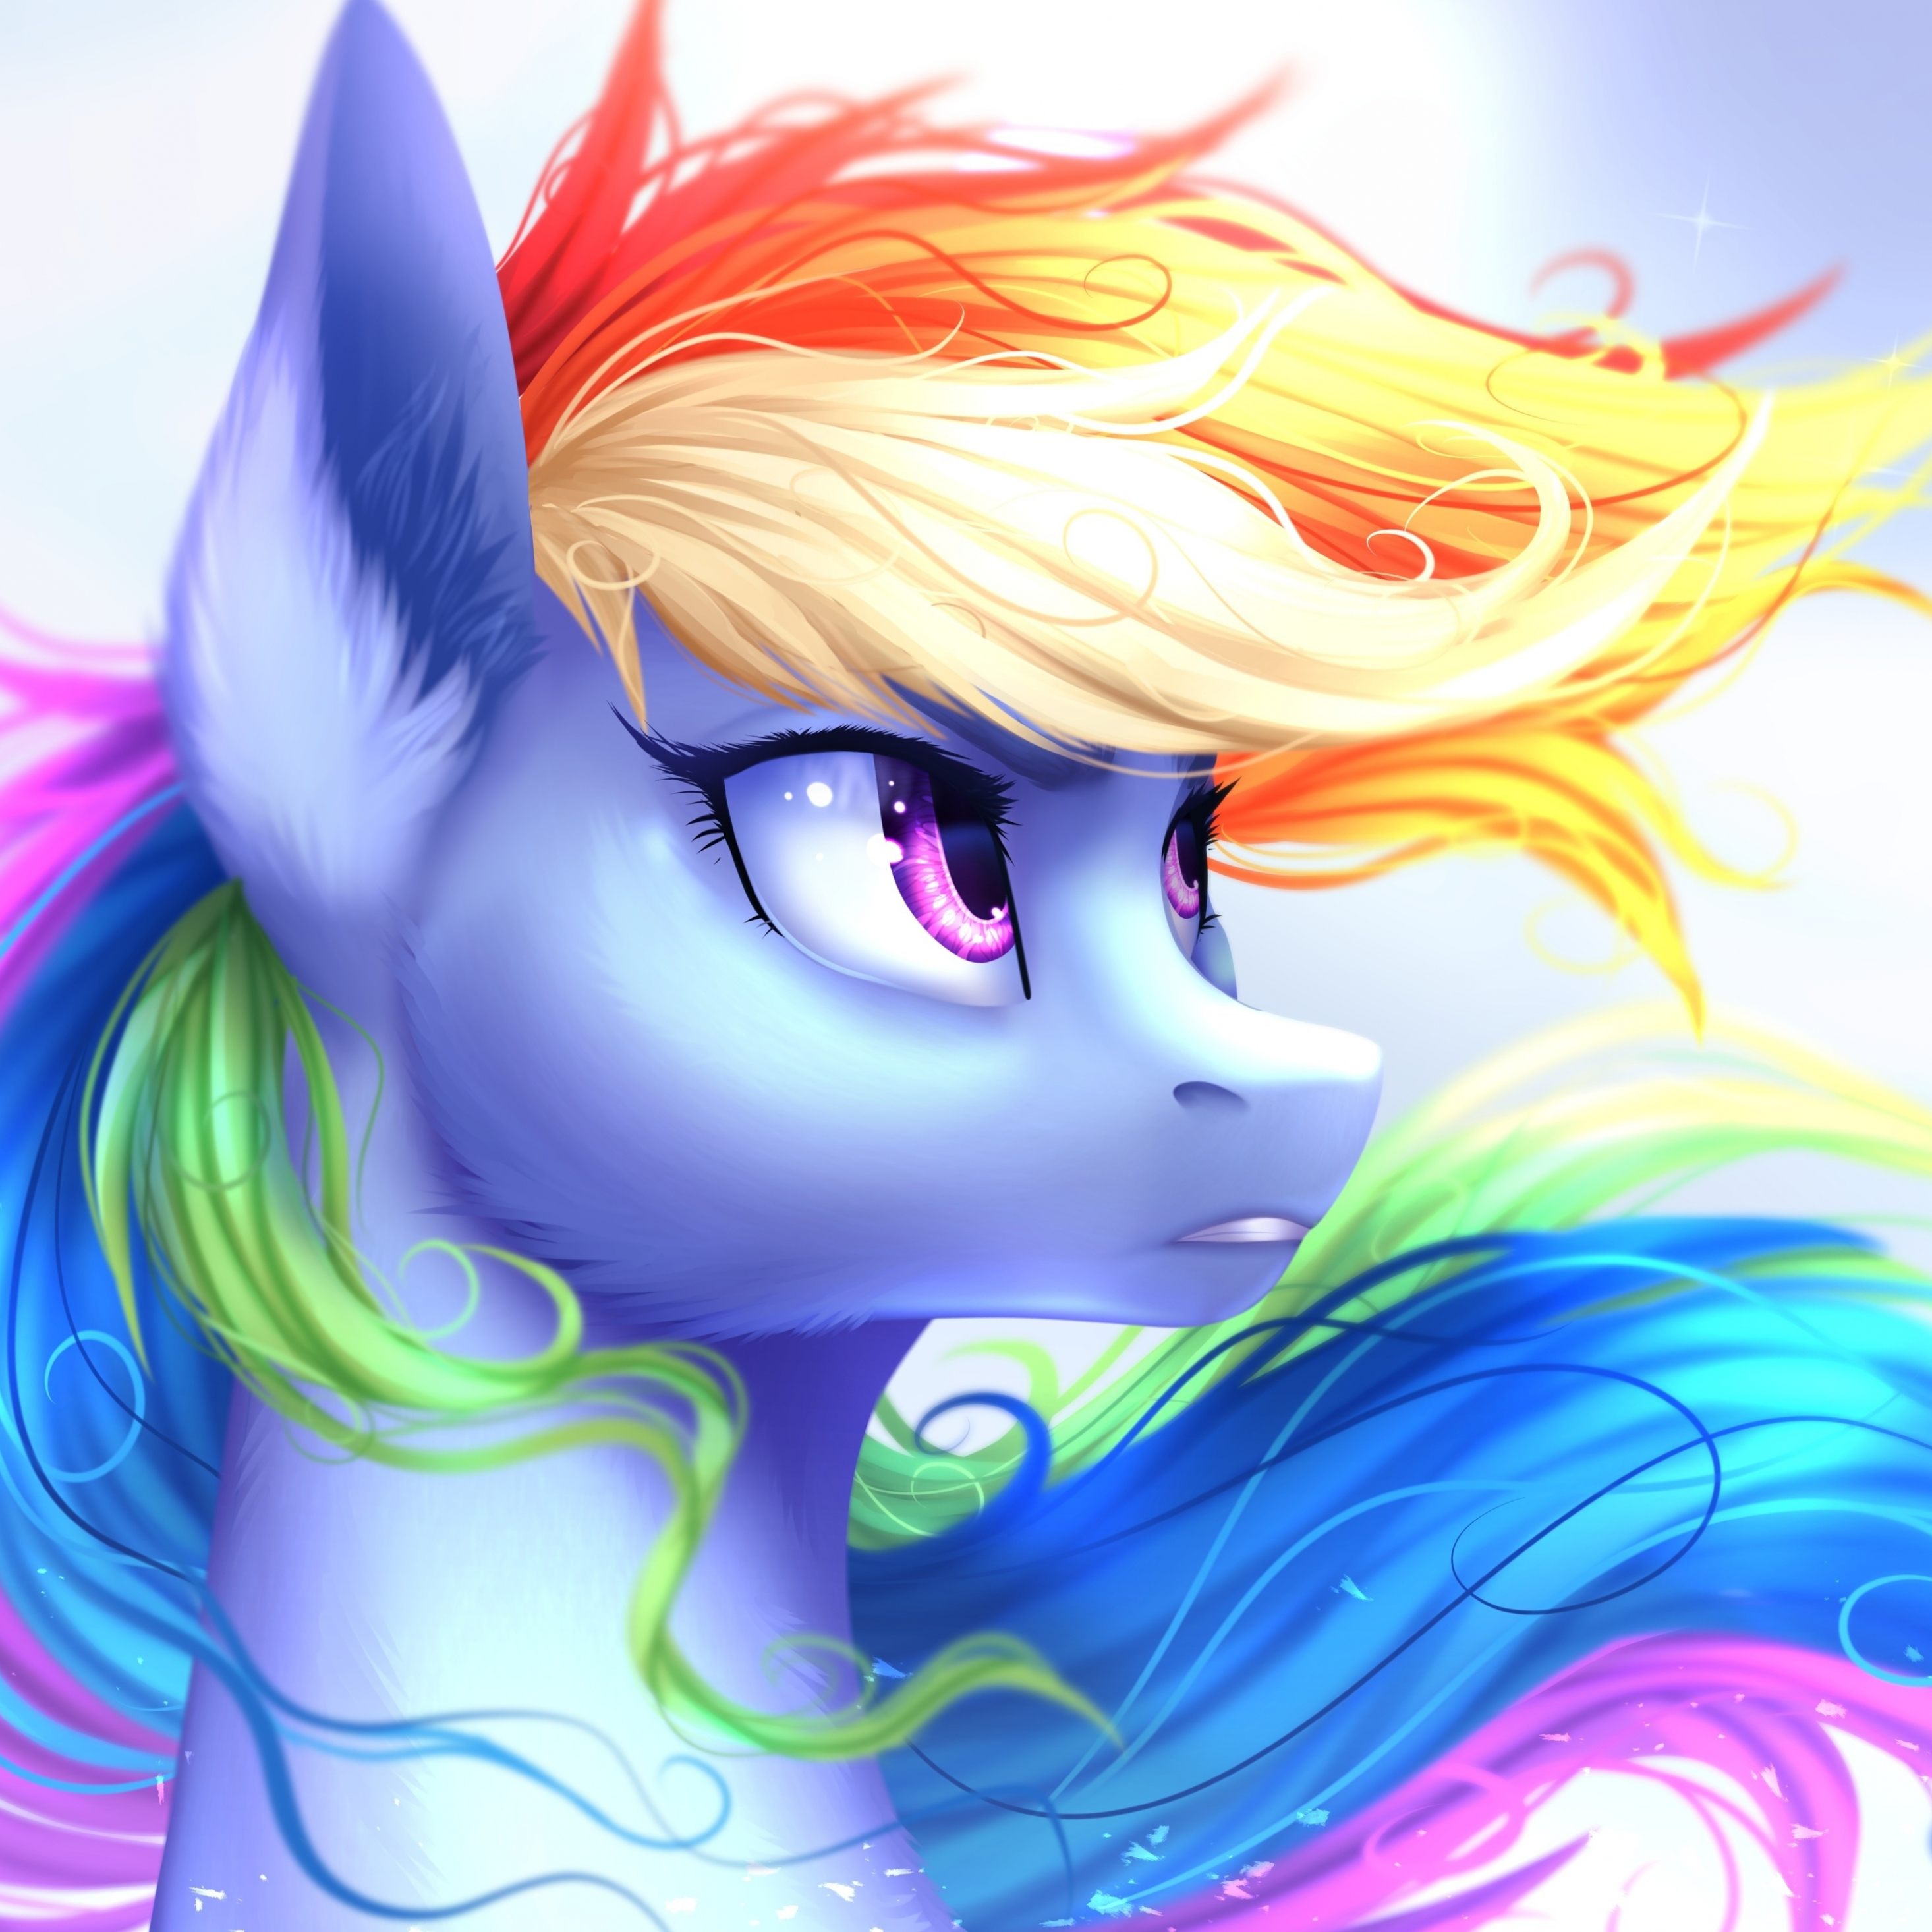 Download wallpaper x horse my little pony rainbow dash colorful art ipad pro retina x hd background